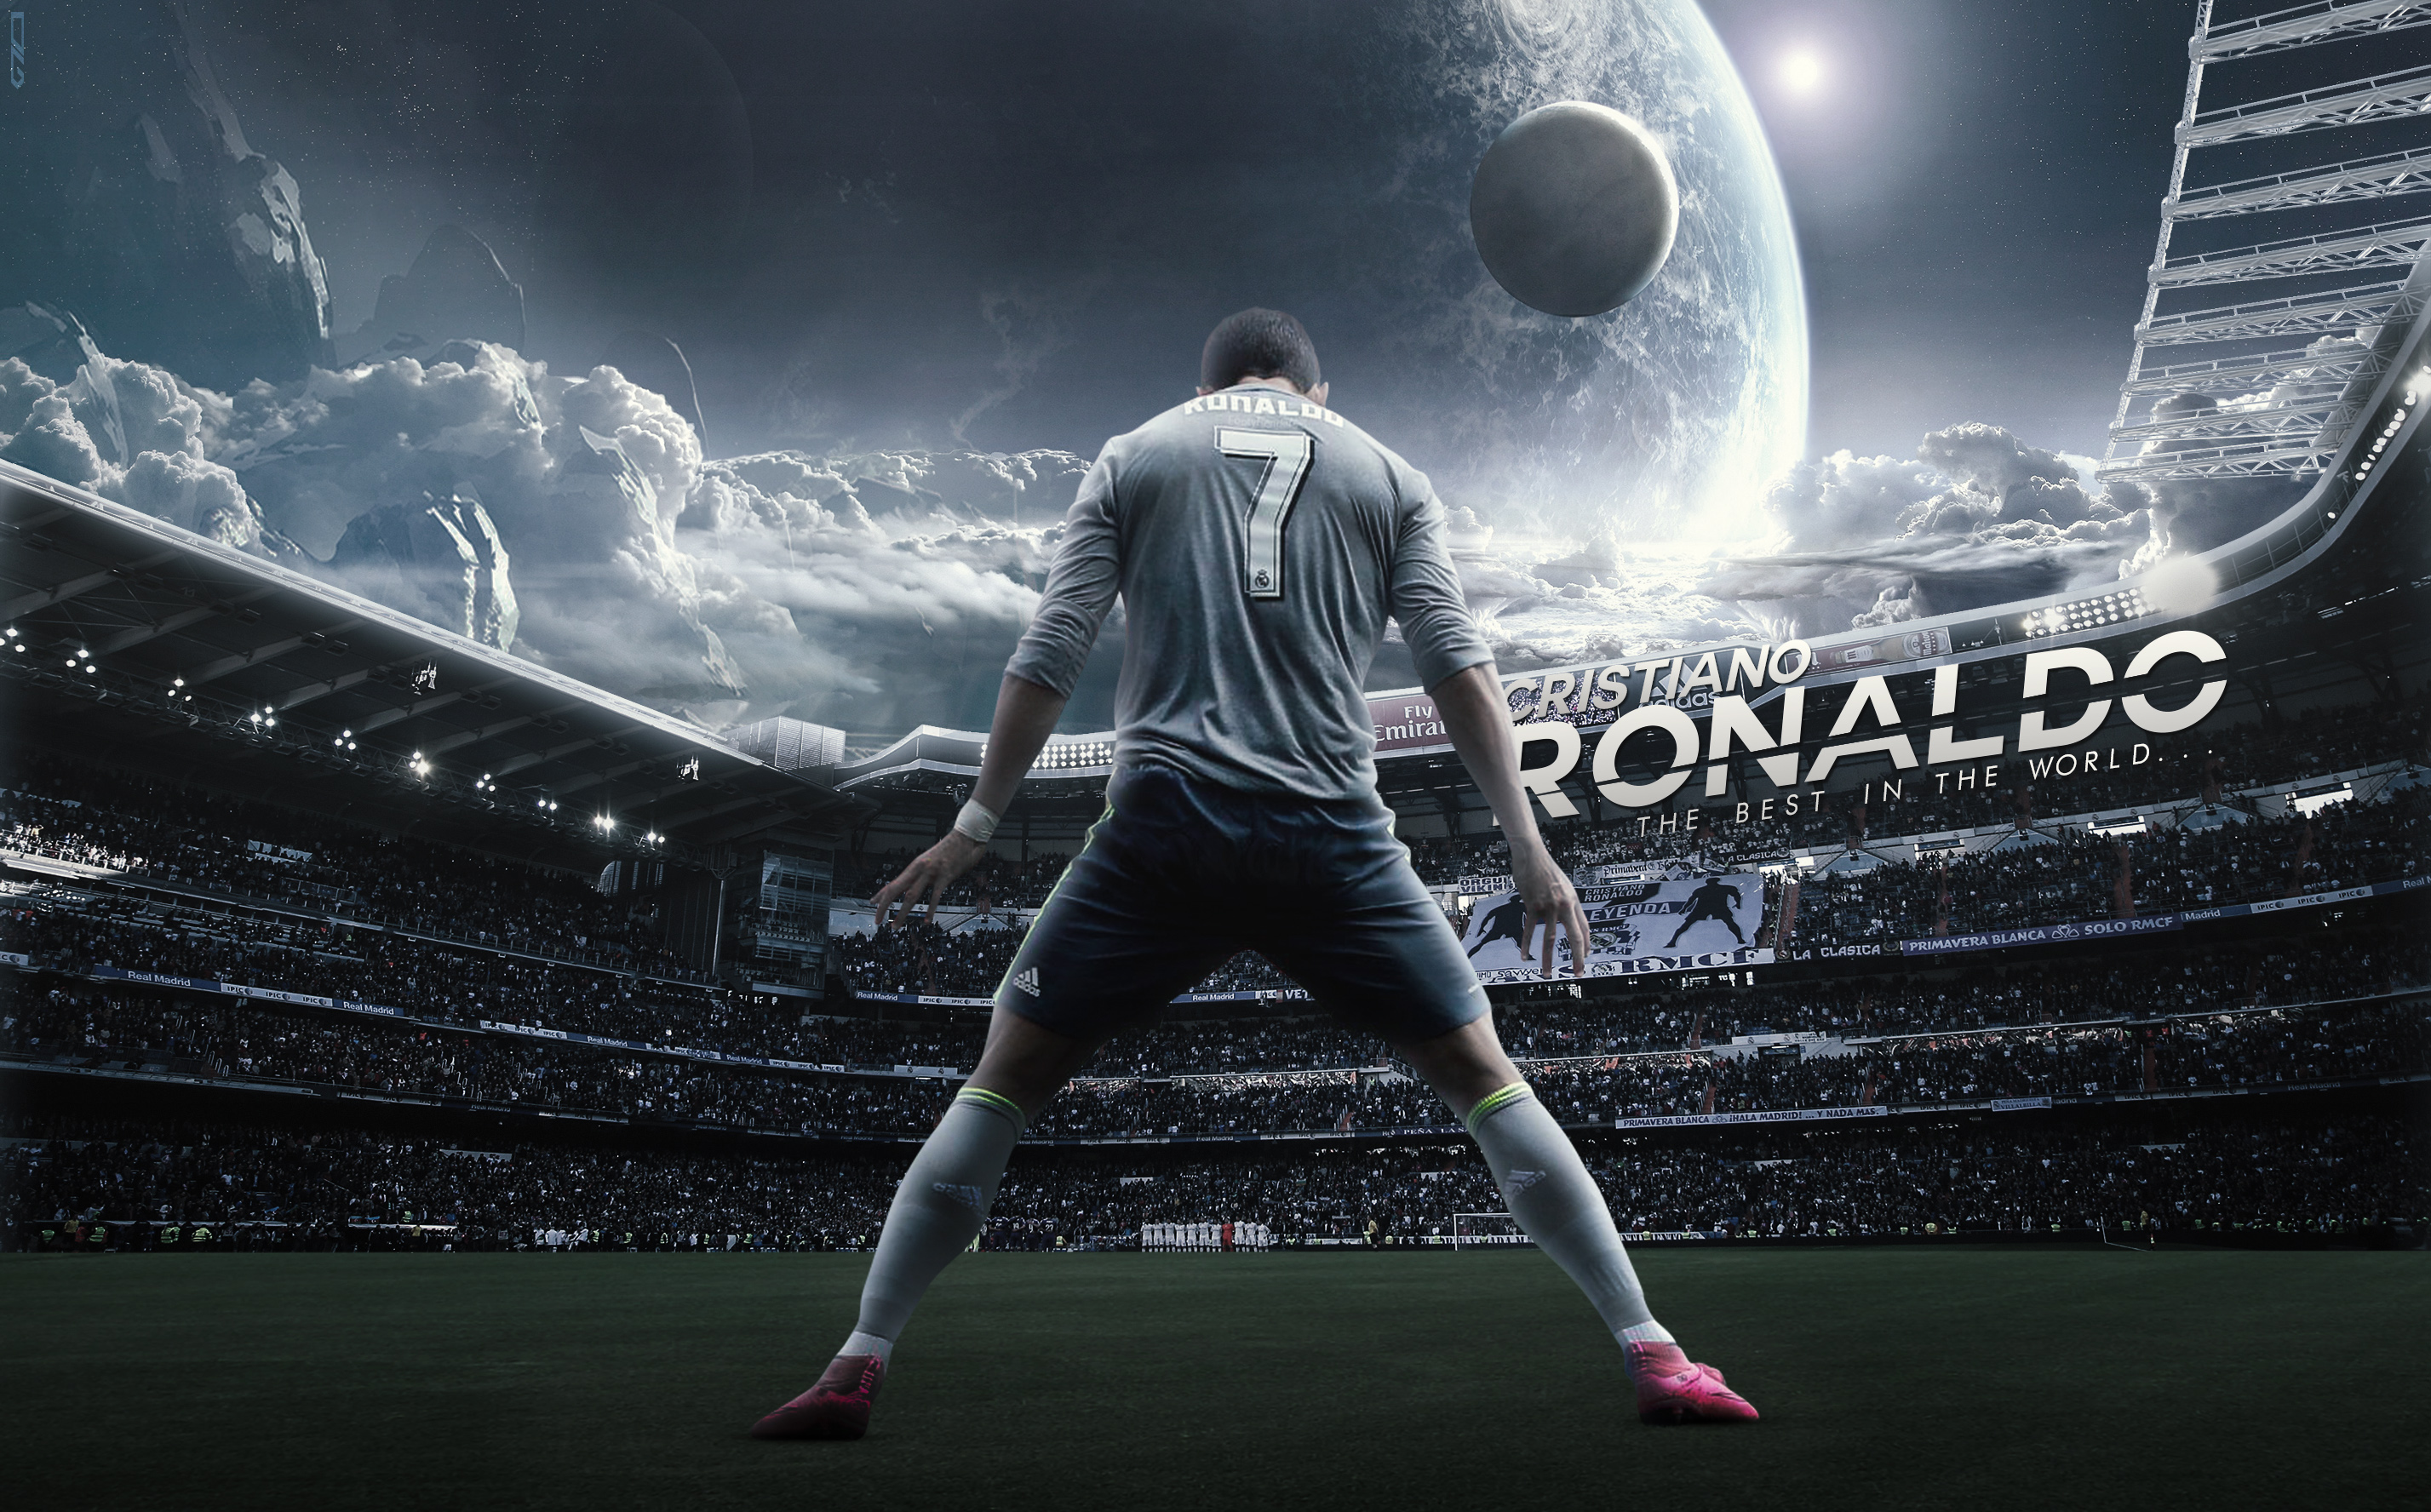 Cristiano Ronaldo Wallpaper By Danialgfx